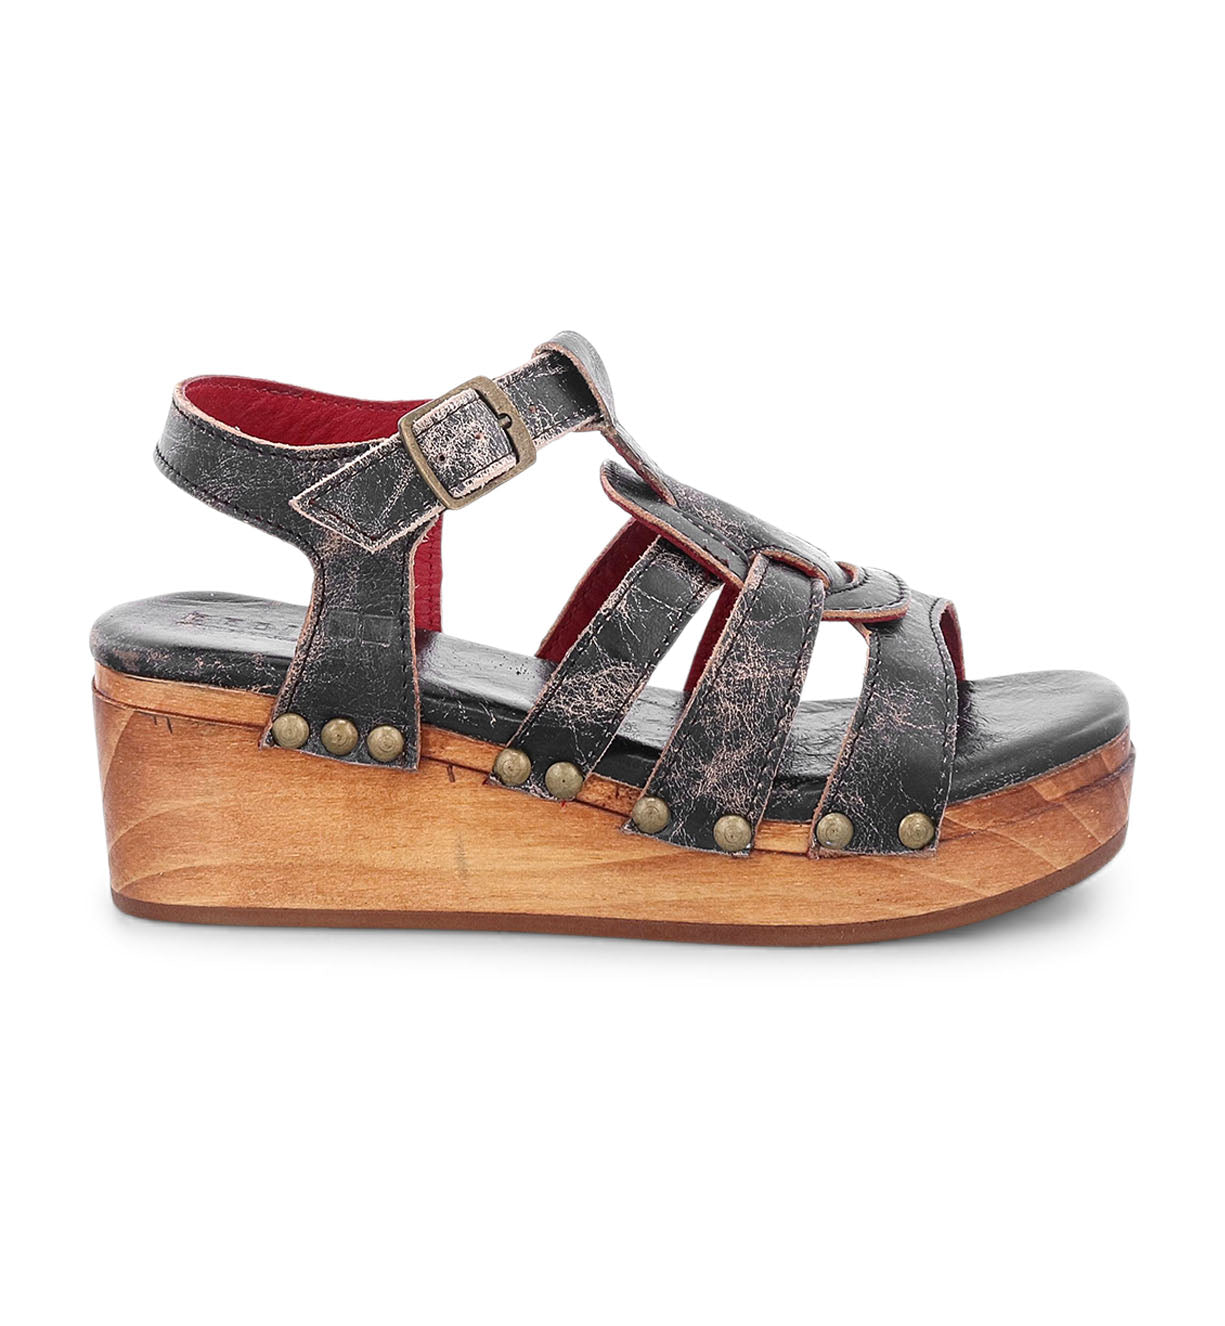 A women's distressed black leather Fabiola platform sandal with straps, by Bed Stu.